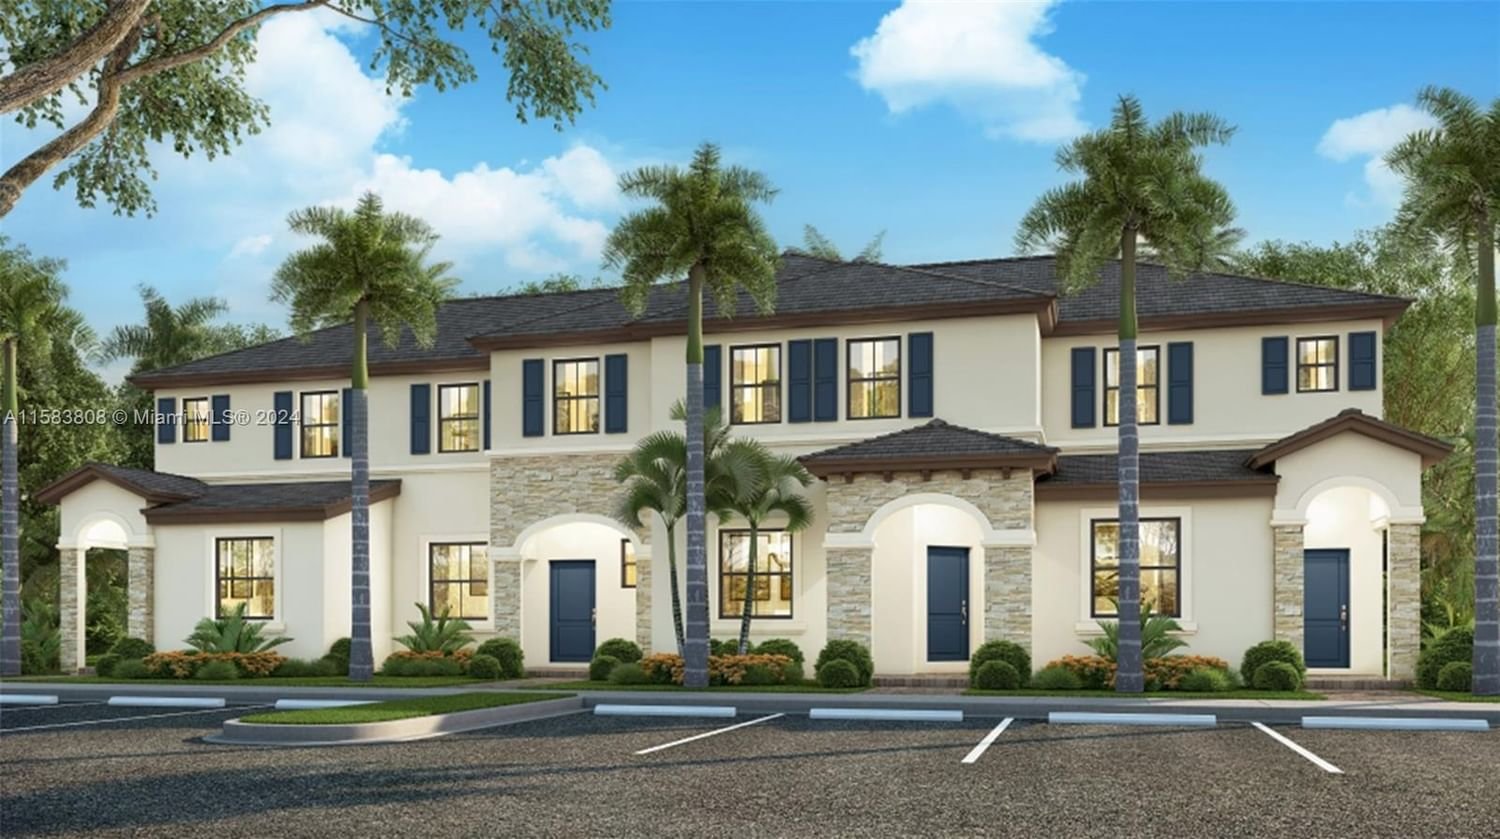 Real estate property located at 12891 232 LN, Miami-Dade County, Siena Reserve, Miami, FL